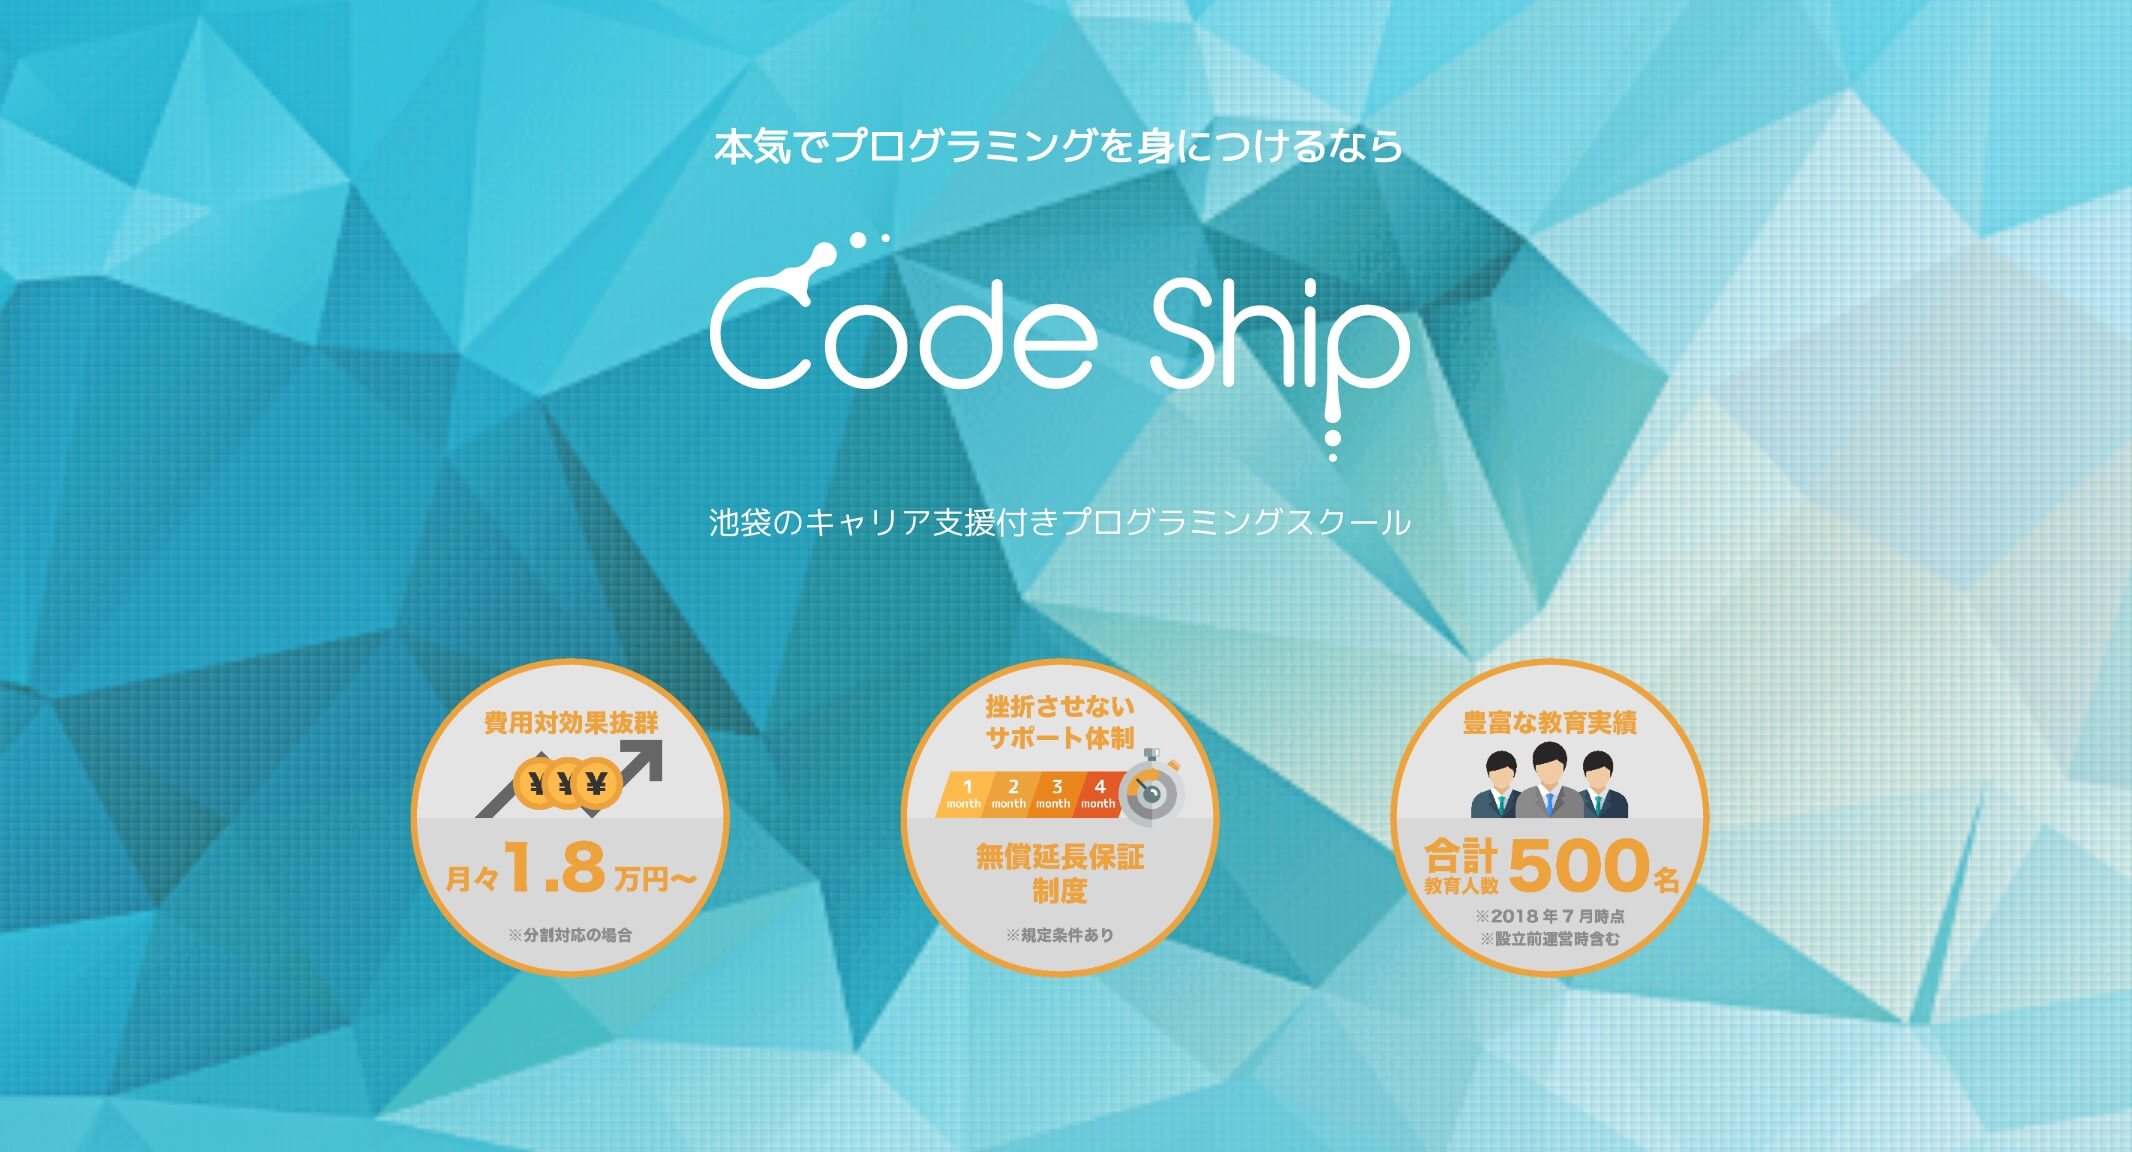 Code Ship